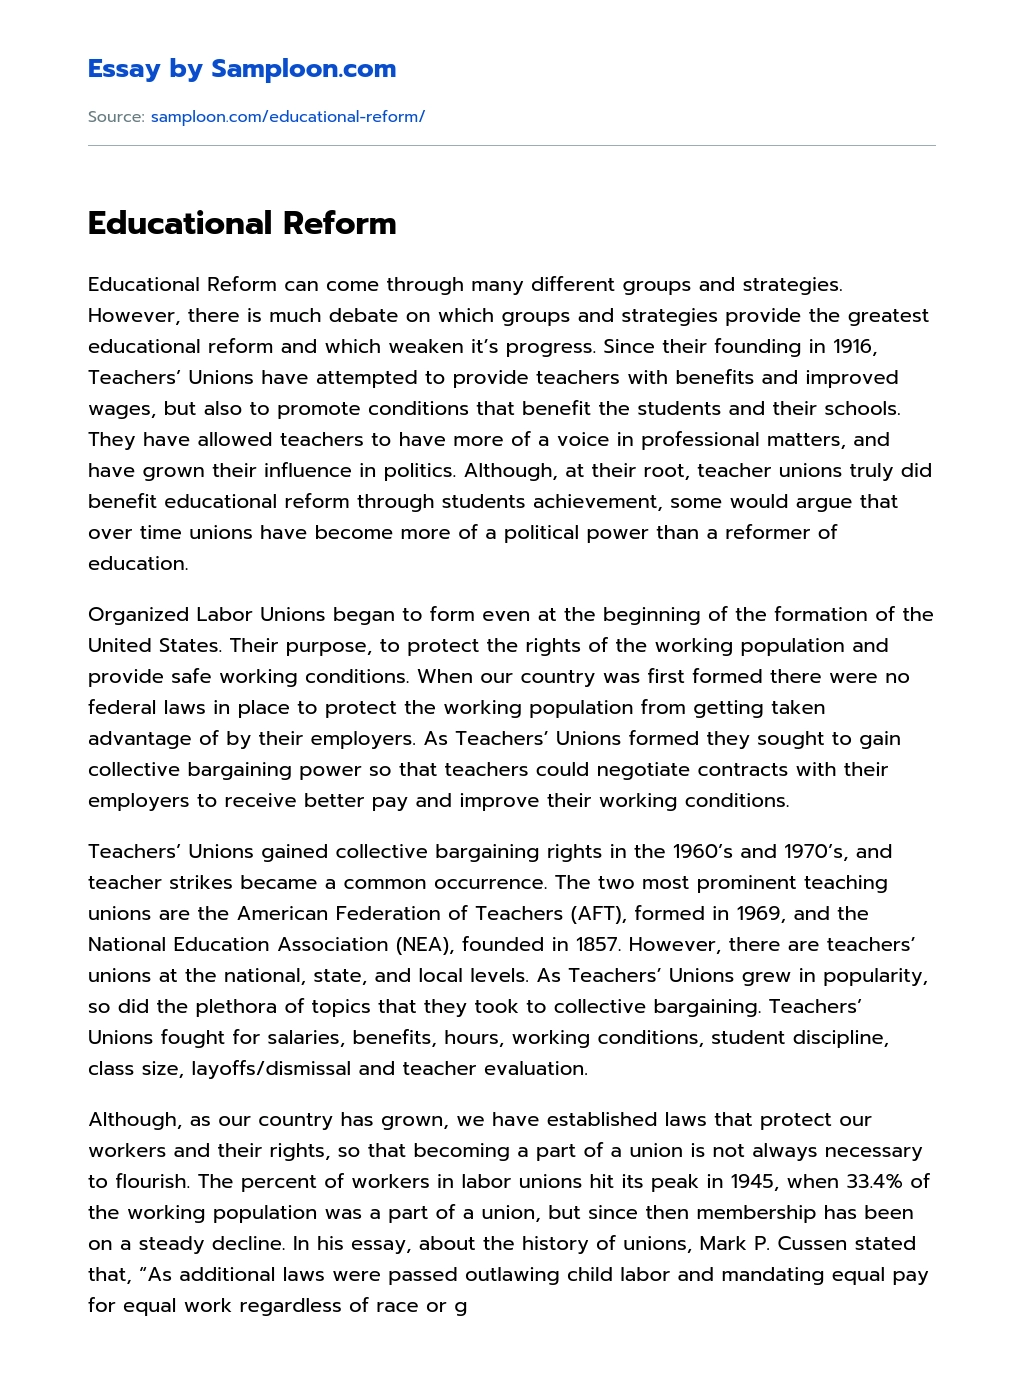 Educational Reform essay